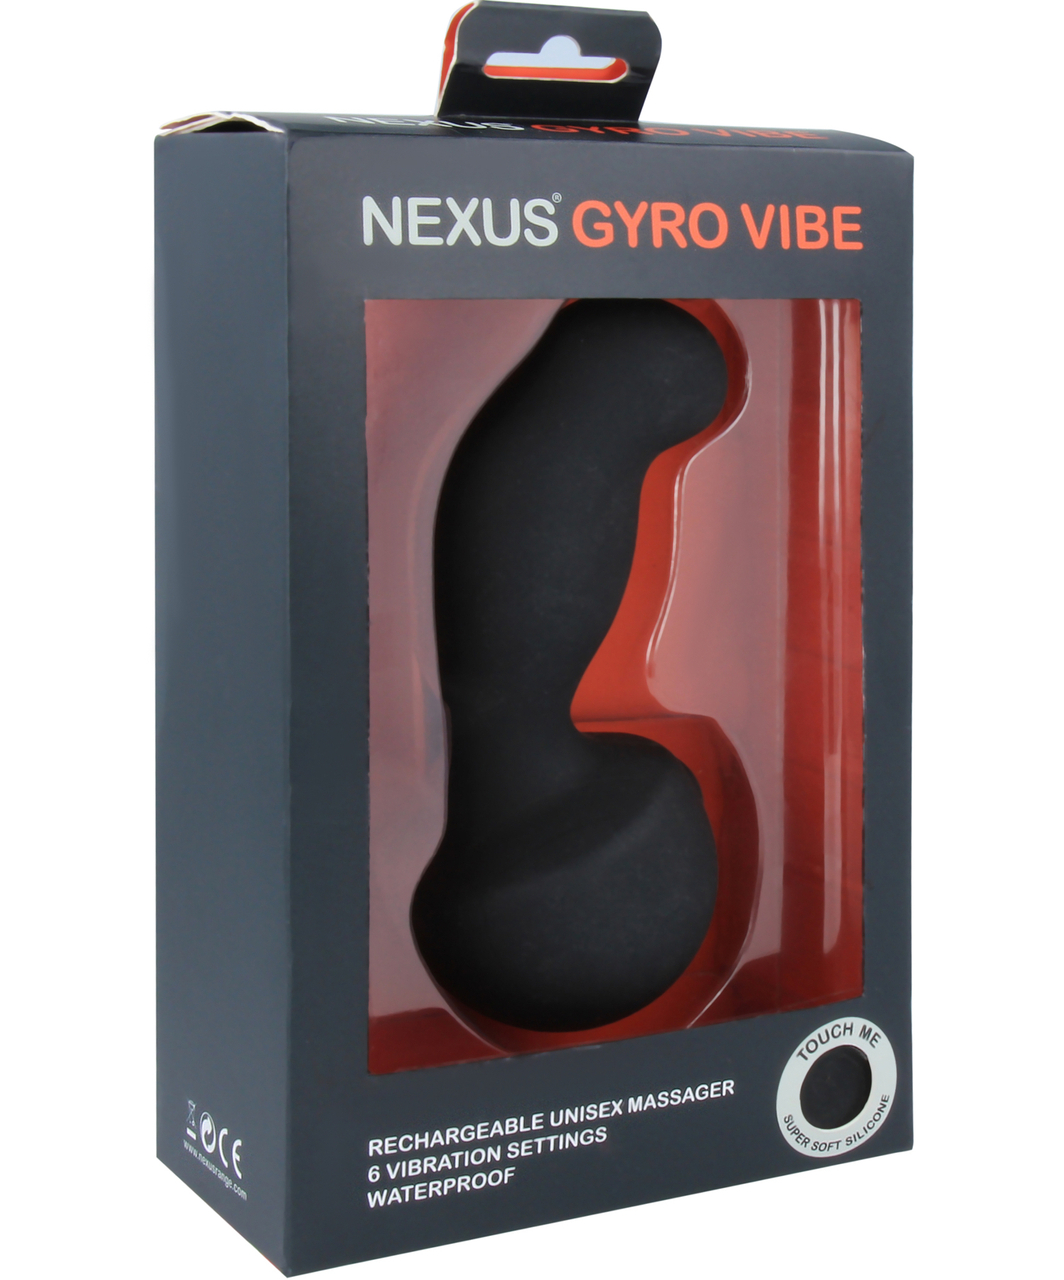 Nexus Gyro Vibe